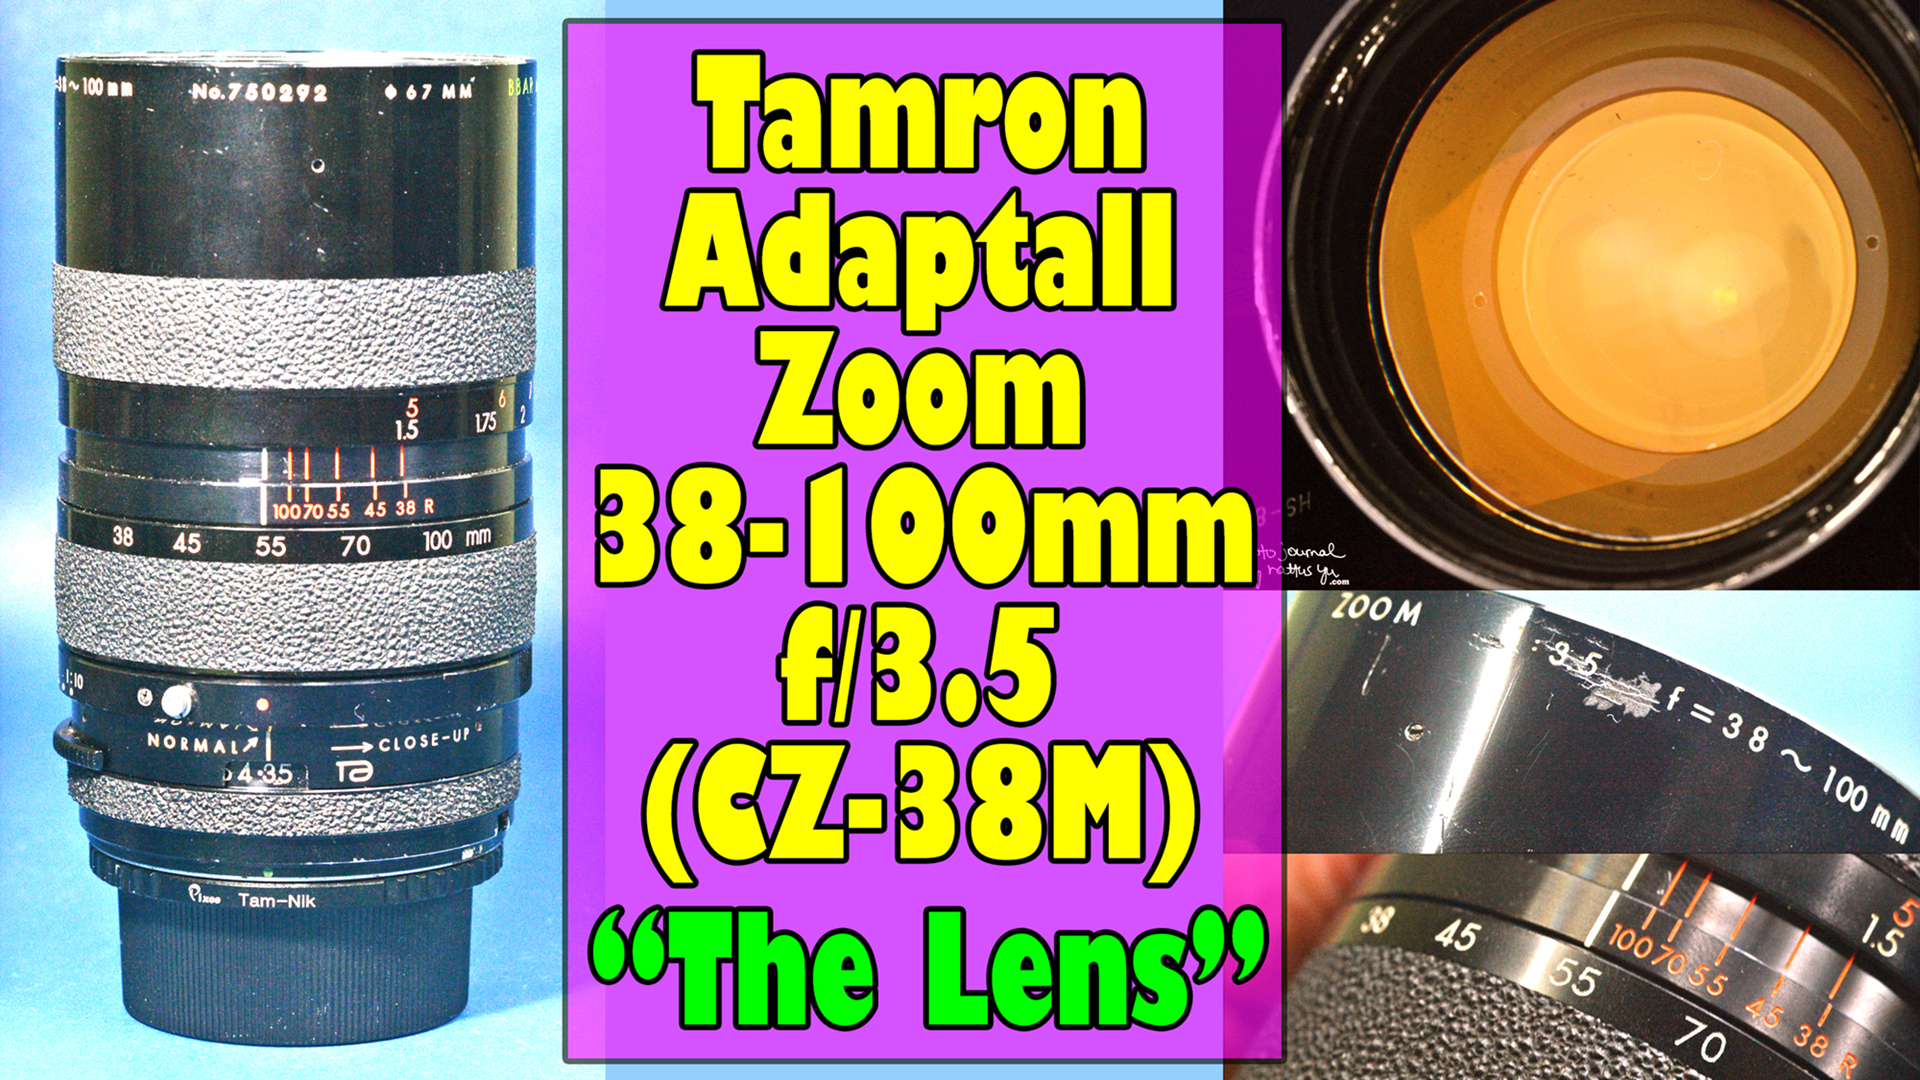 Tamron Adaptall Zoom 38-100mm f/3.5 aka "The Lens" (Model 'CZ-38M')